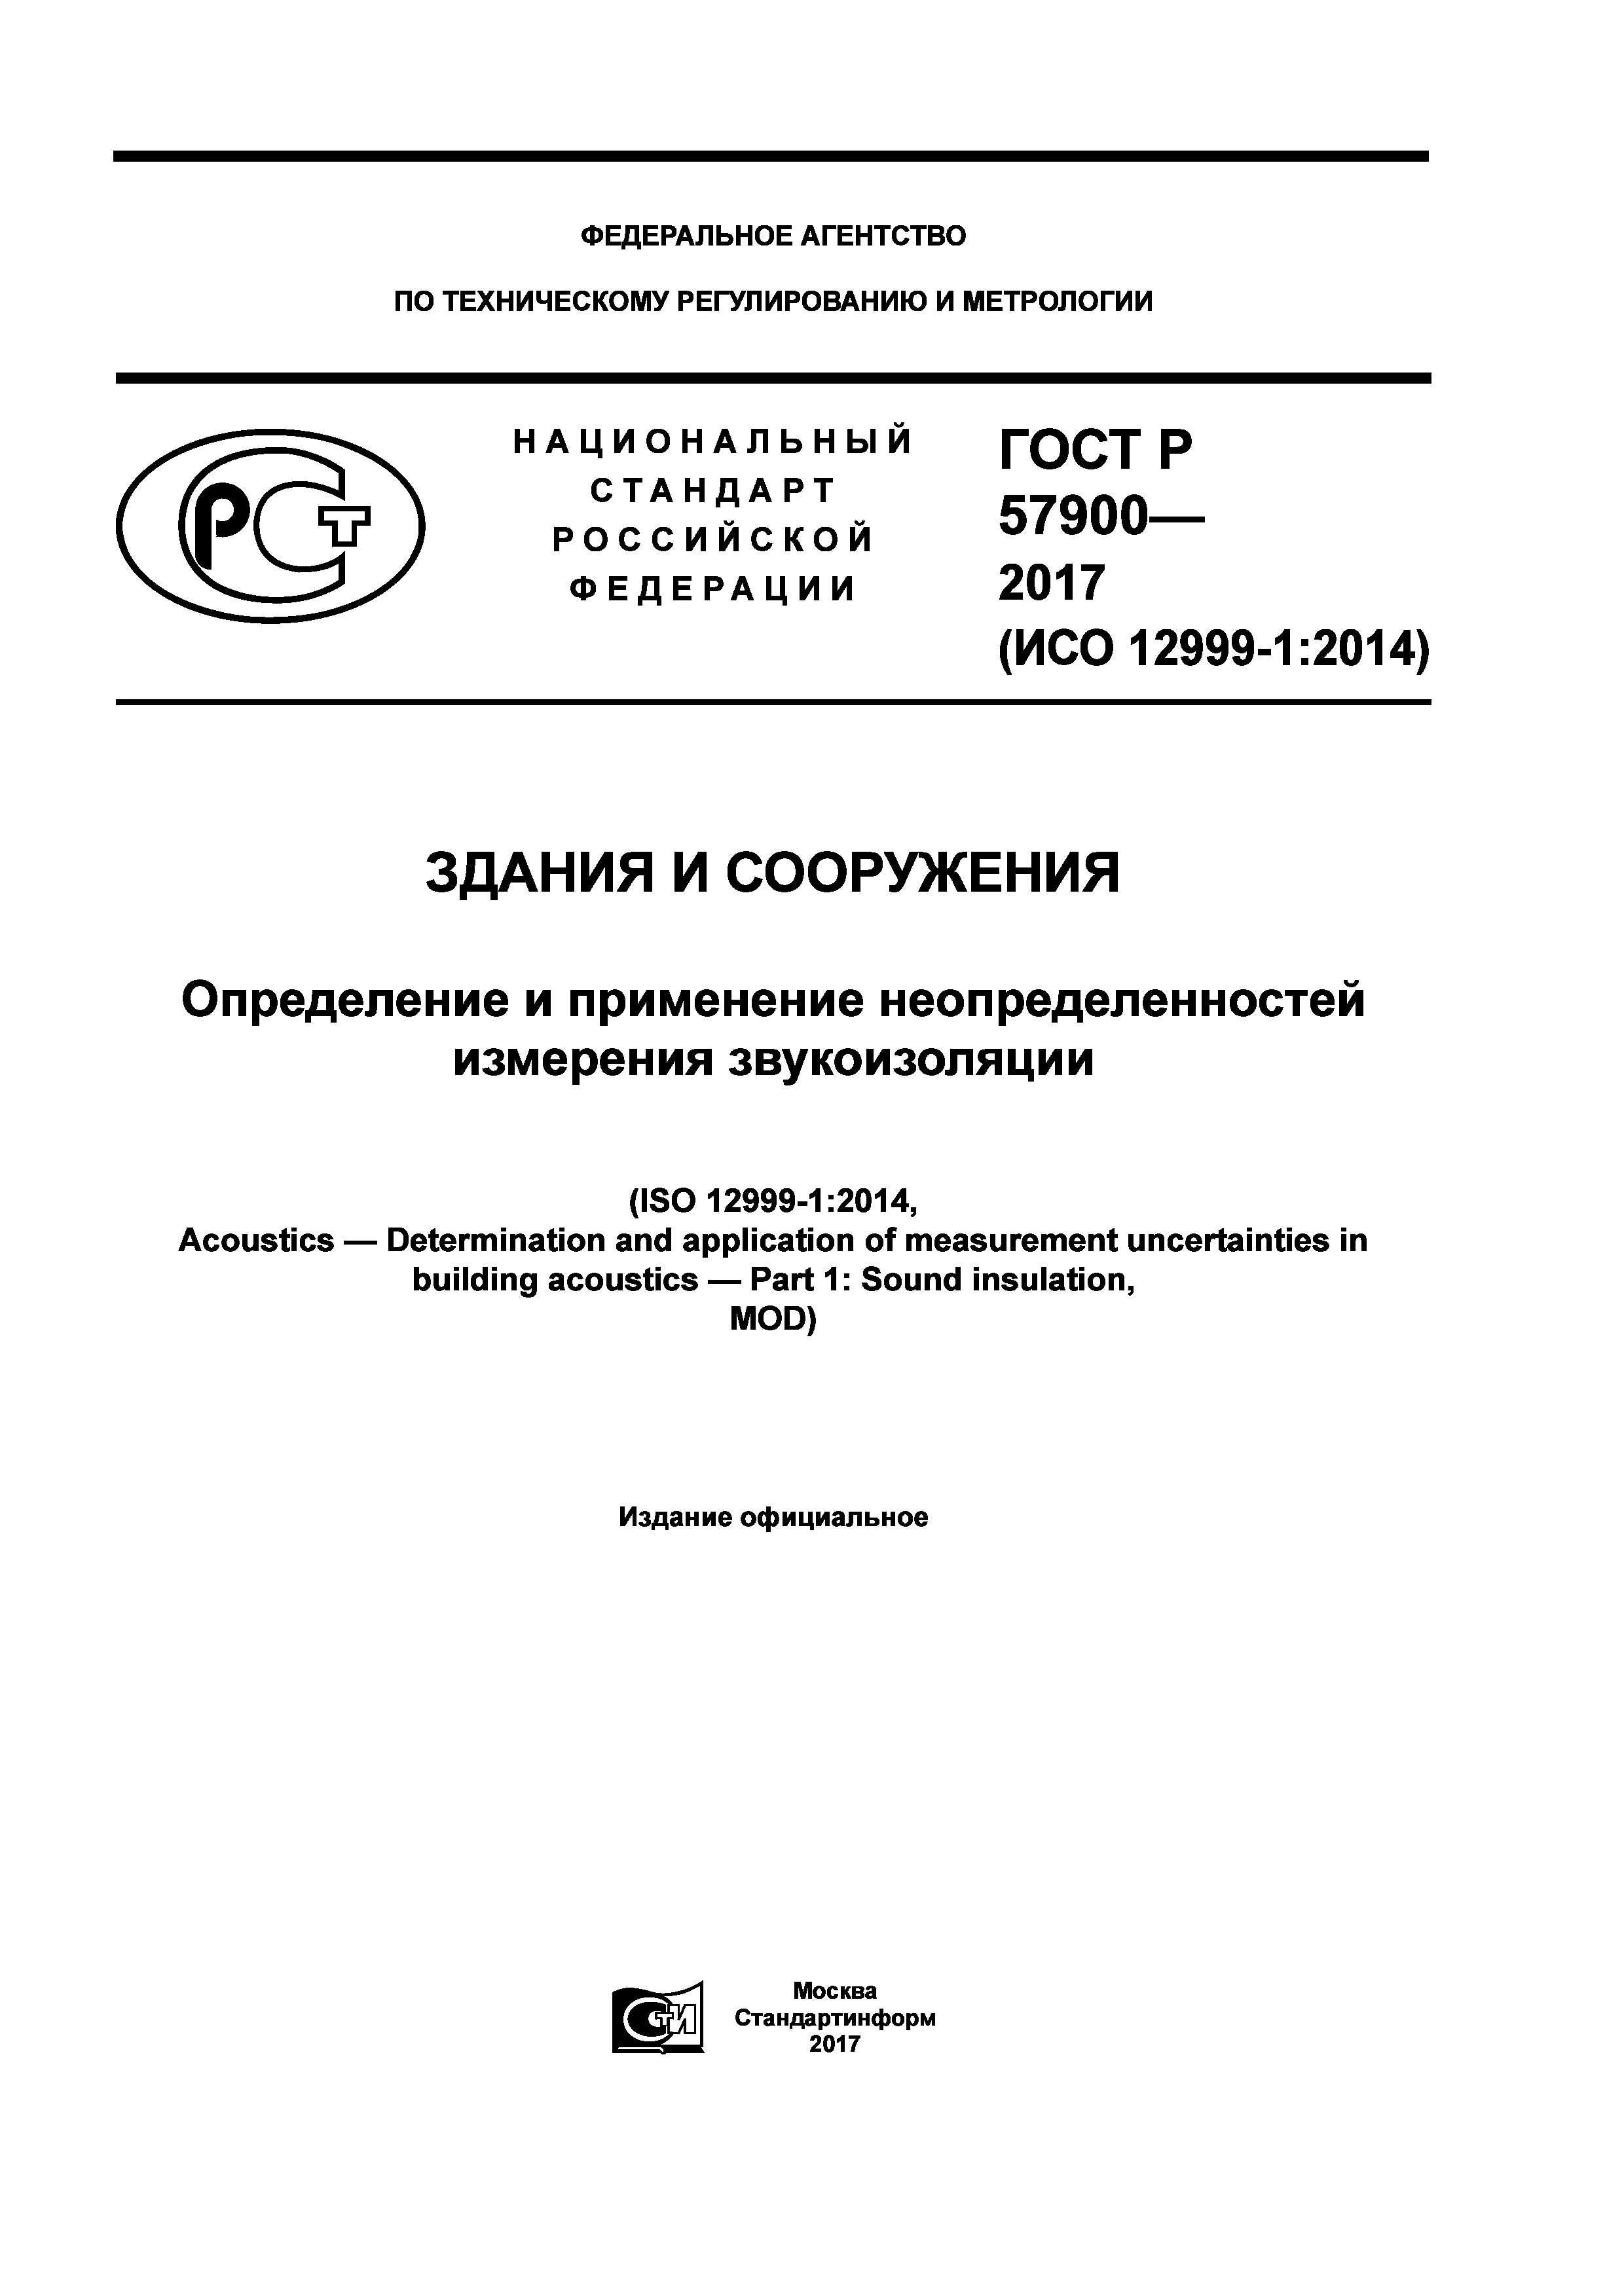 ГОСТ Р 57900-2017